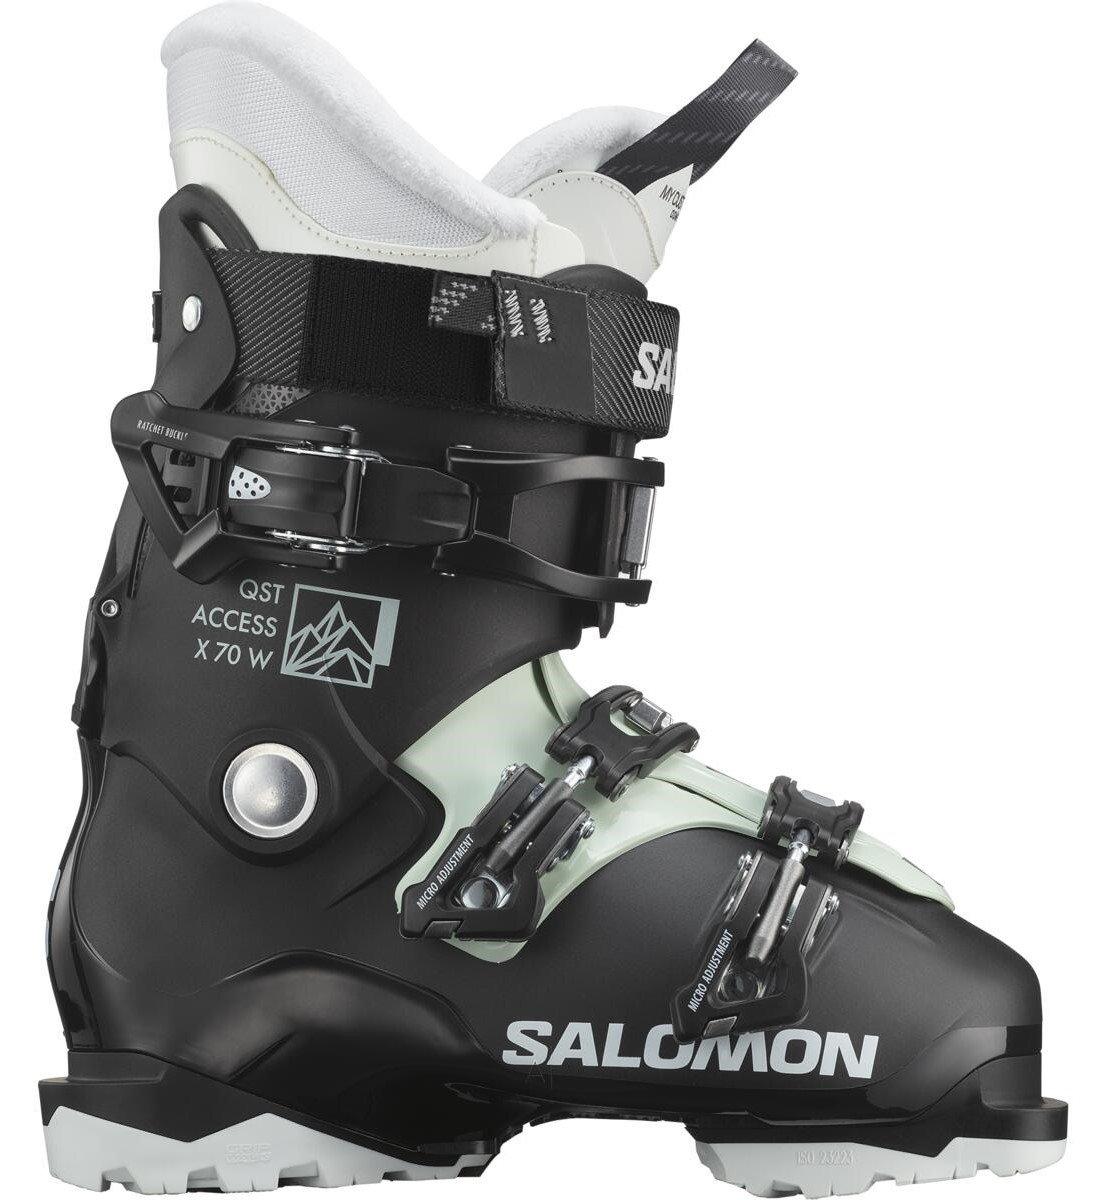 Dámske lyžiarky Salomon QST Access X70 W GW Veľkosť: 23 cm